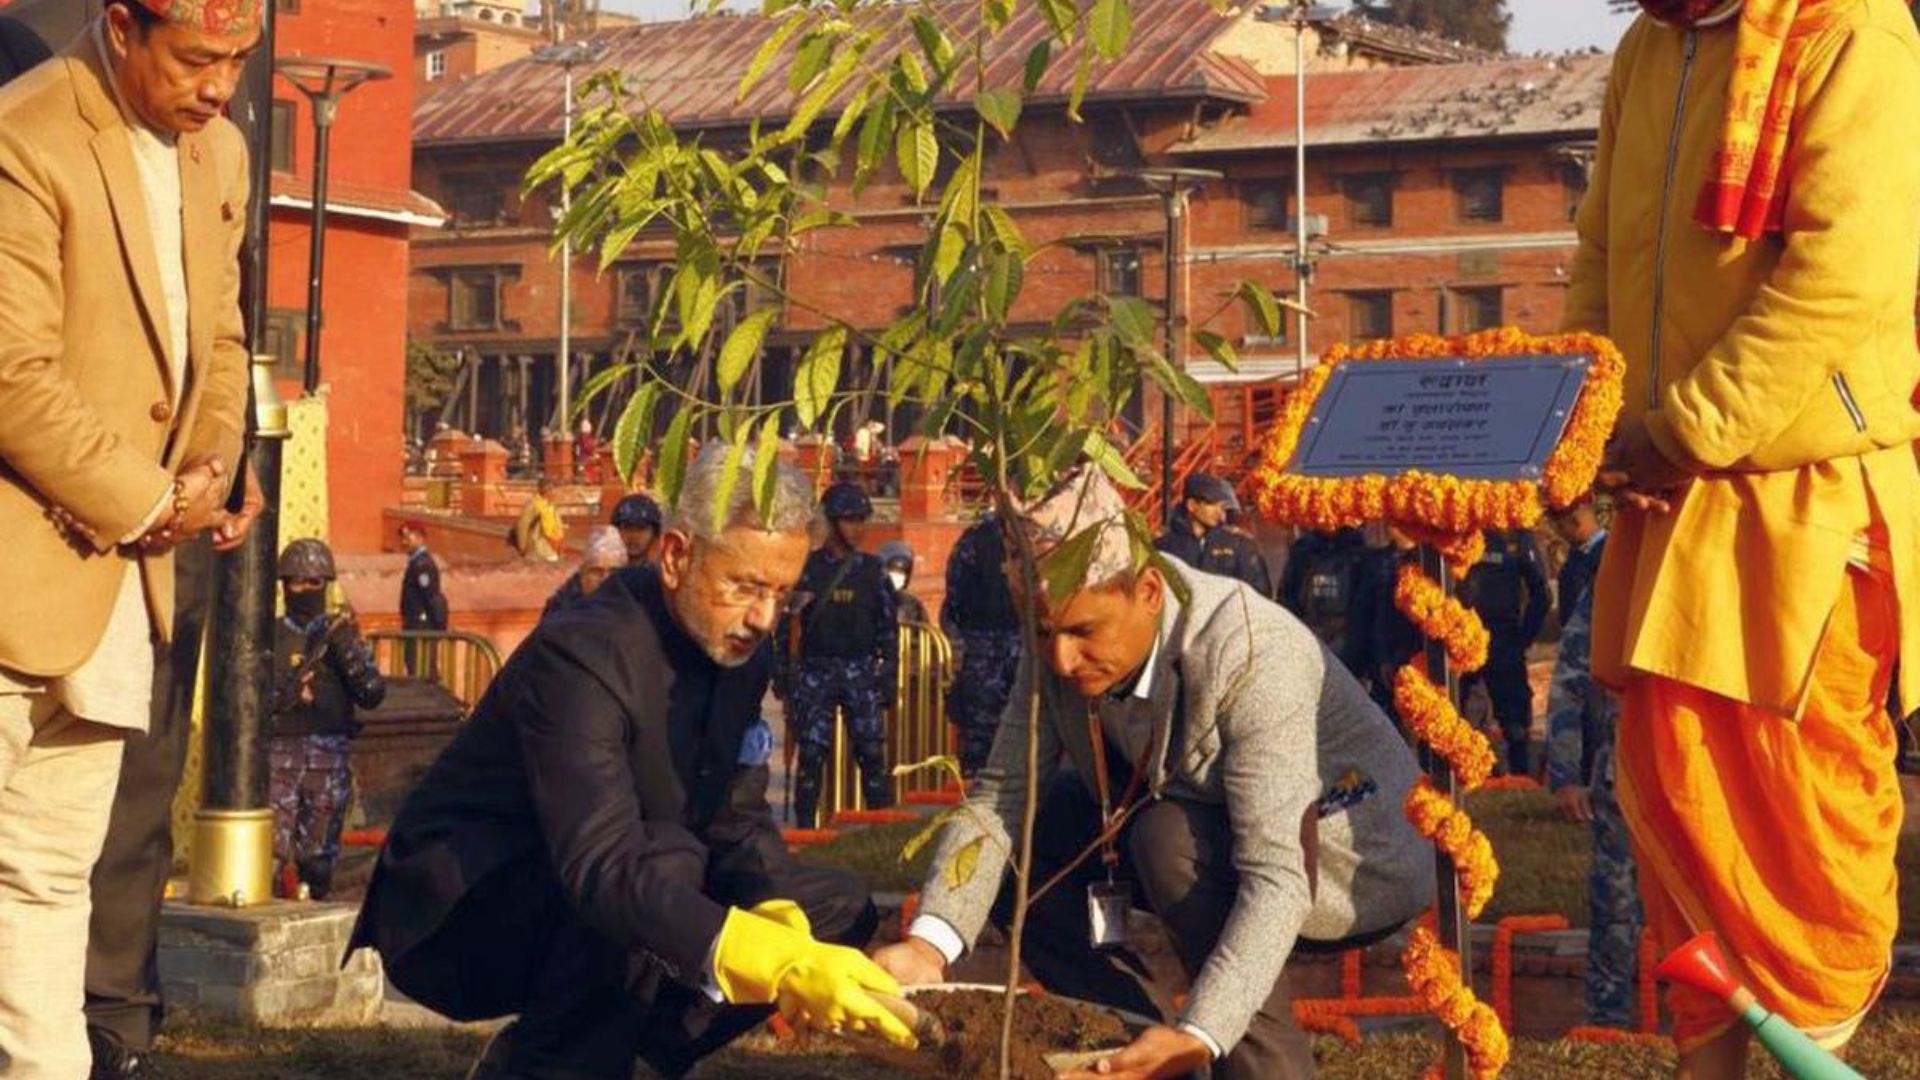 EAM Jaishankar offers prayers at Pashupatinath Temple in Kathmandu